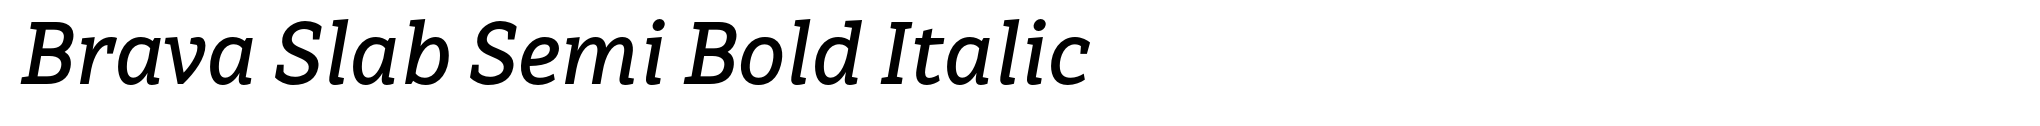 Brava Slab Semi Bold Italic image